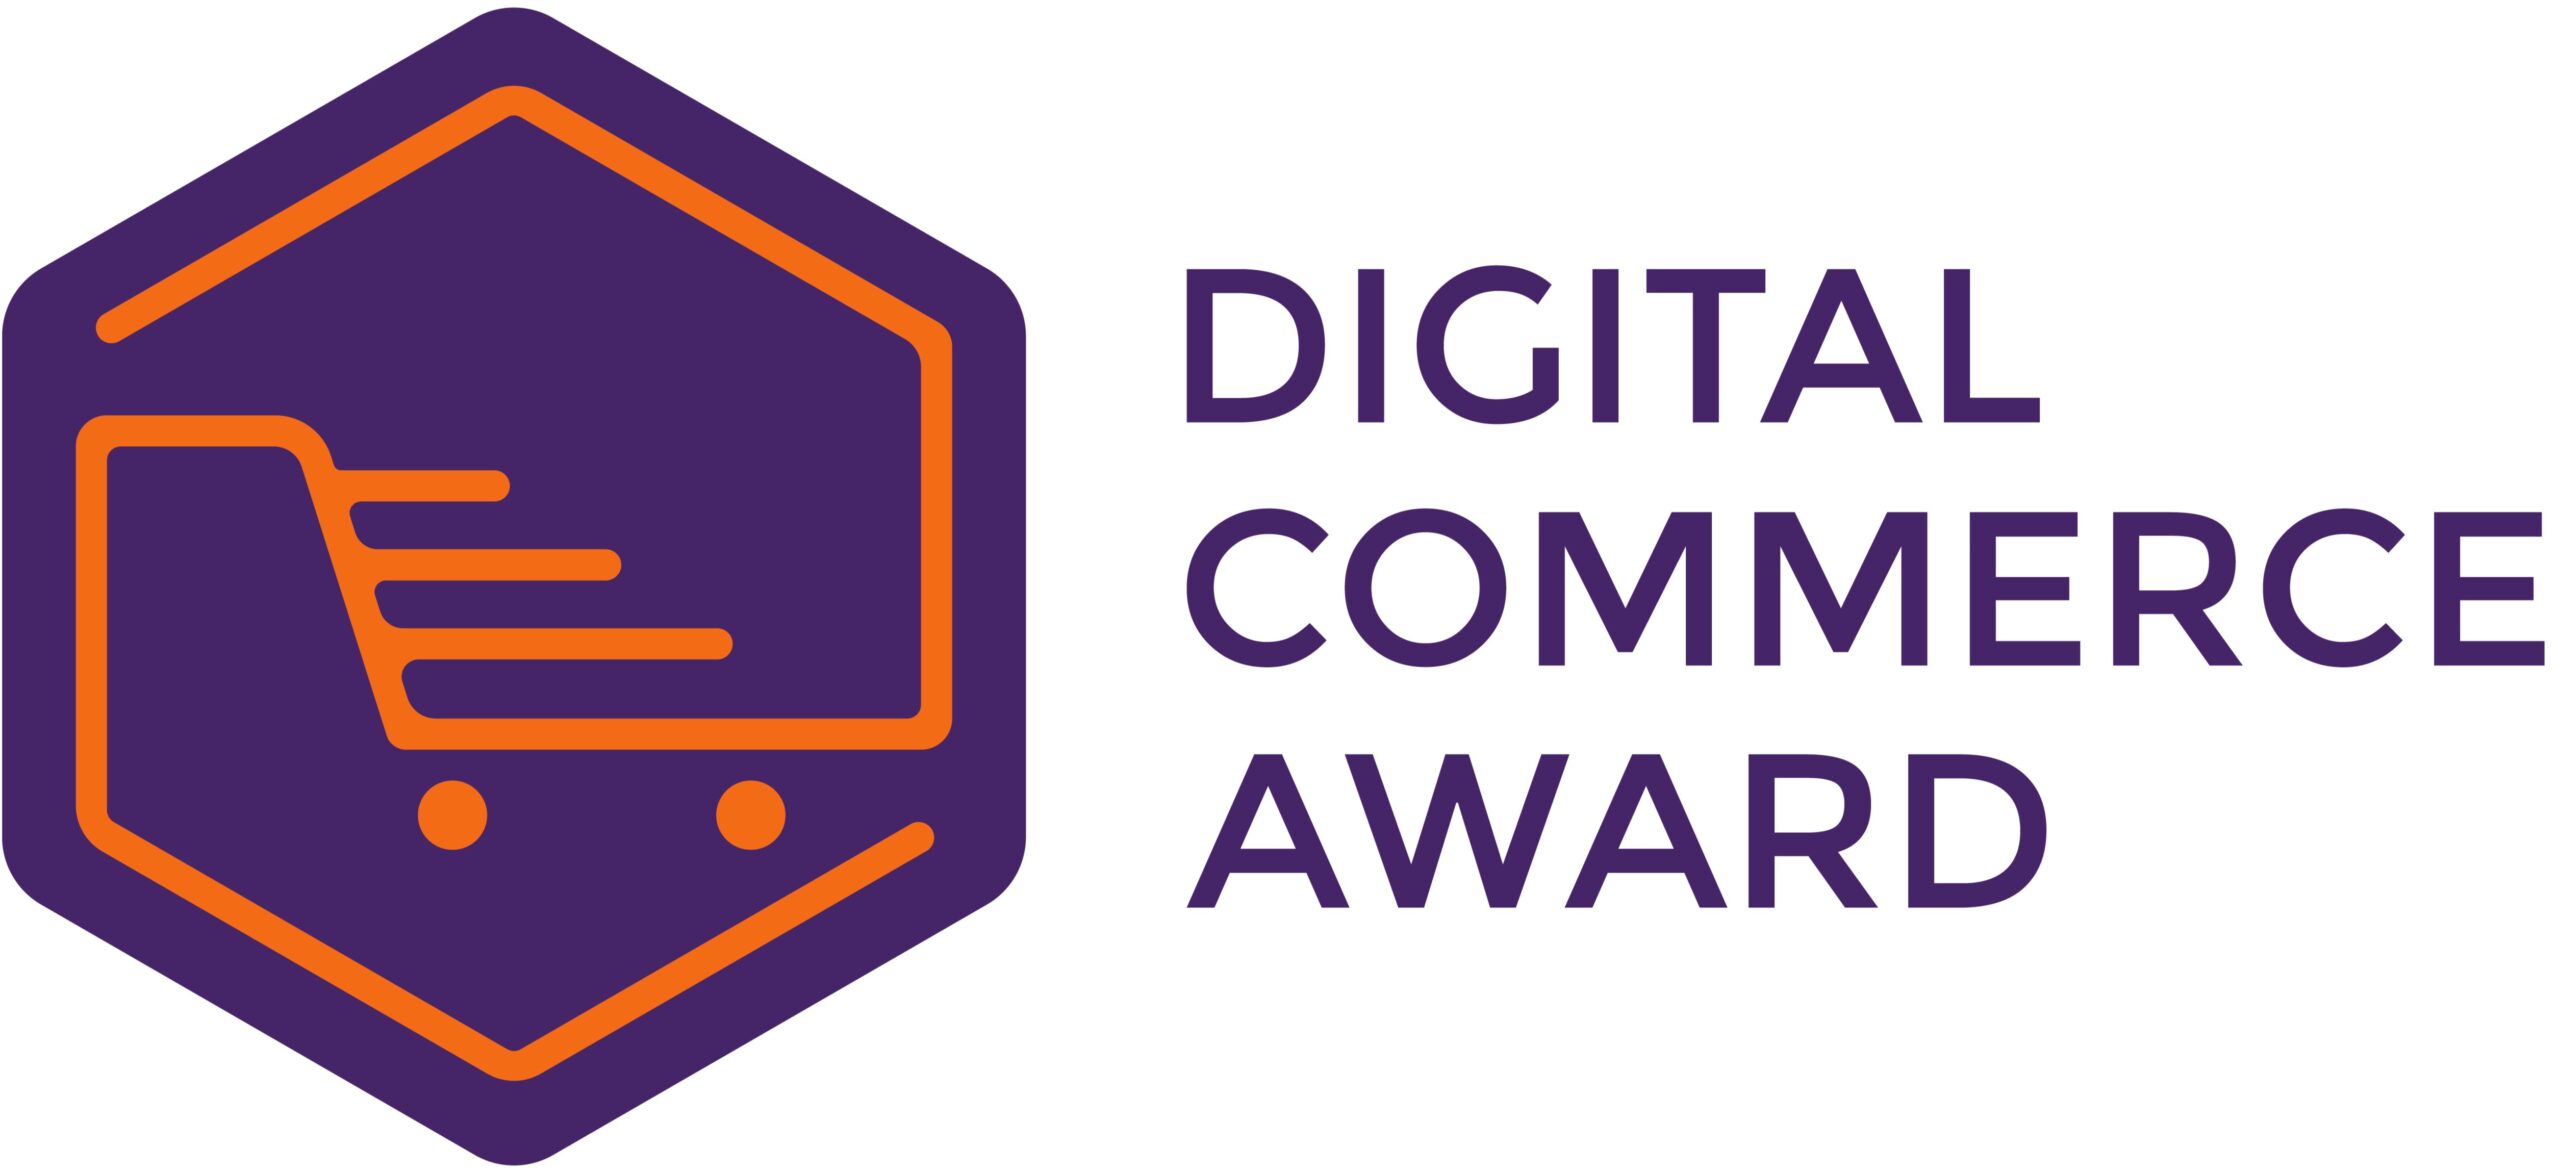 neues Digital Commerce Award Logo mit text